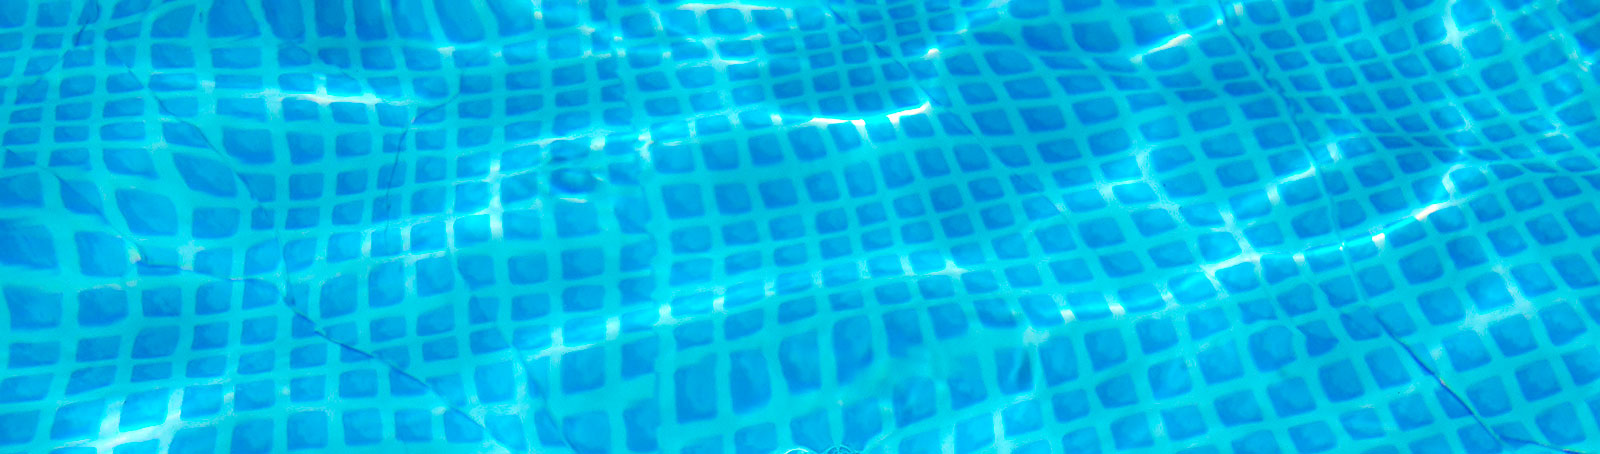 manteniemiento de piscinas madrid